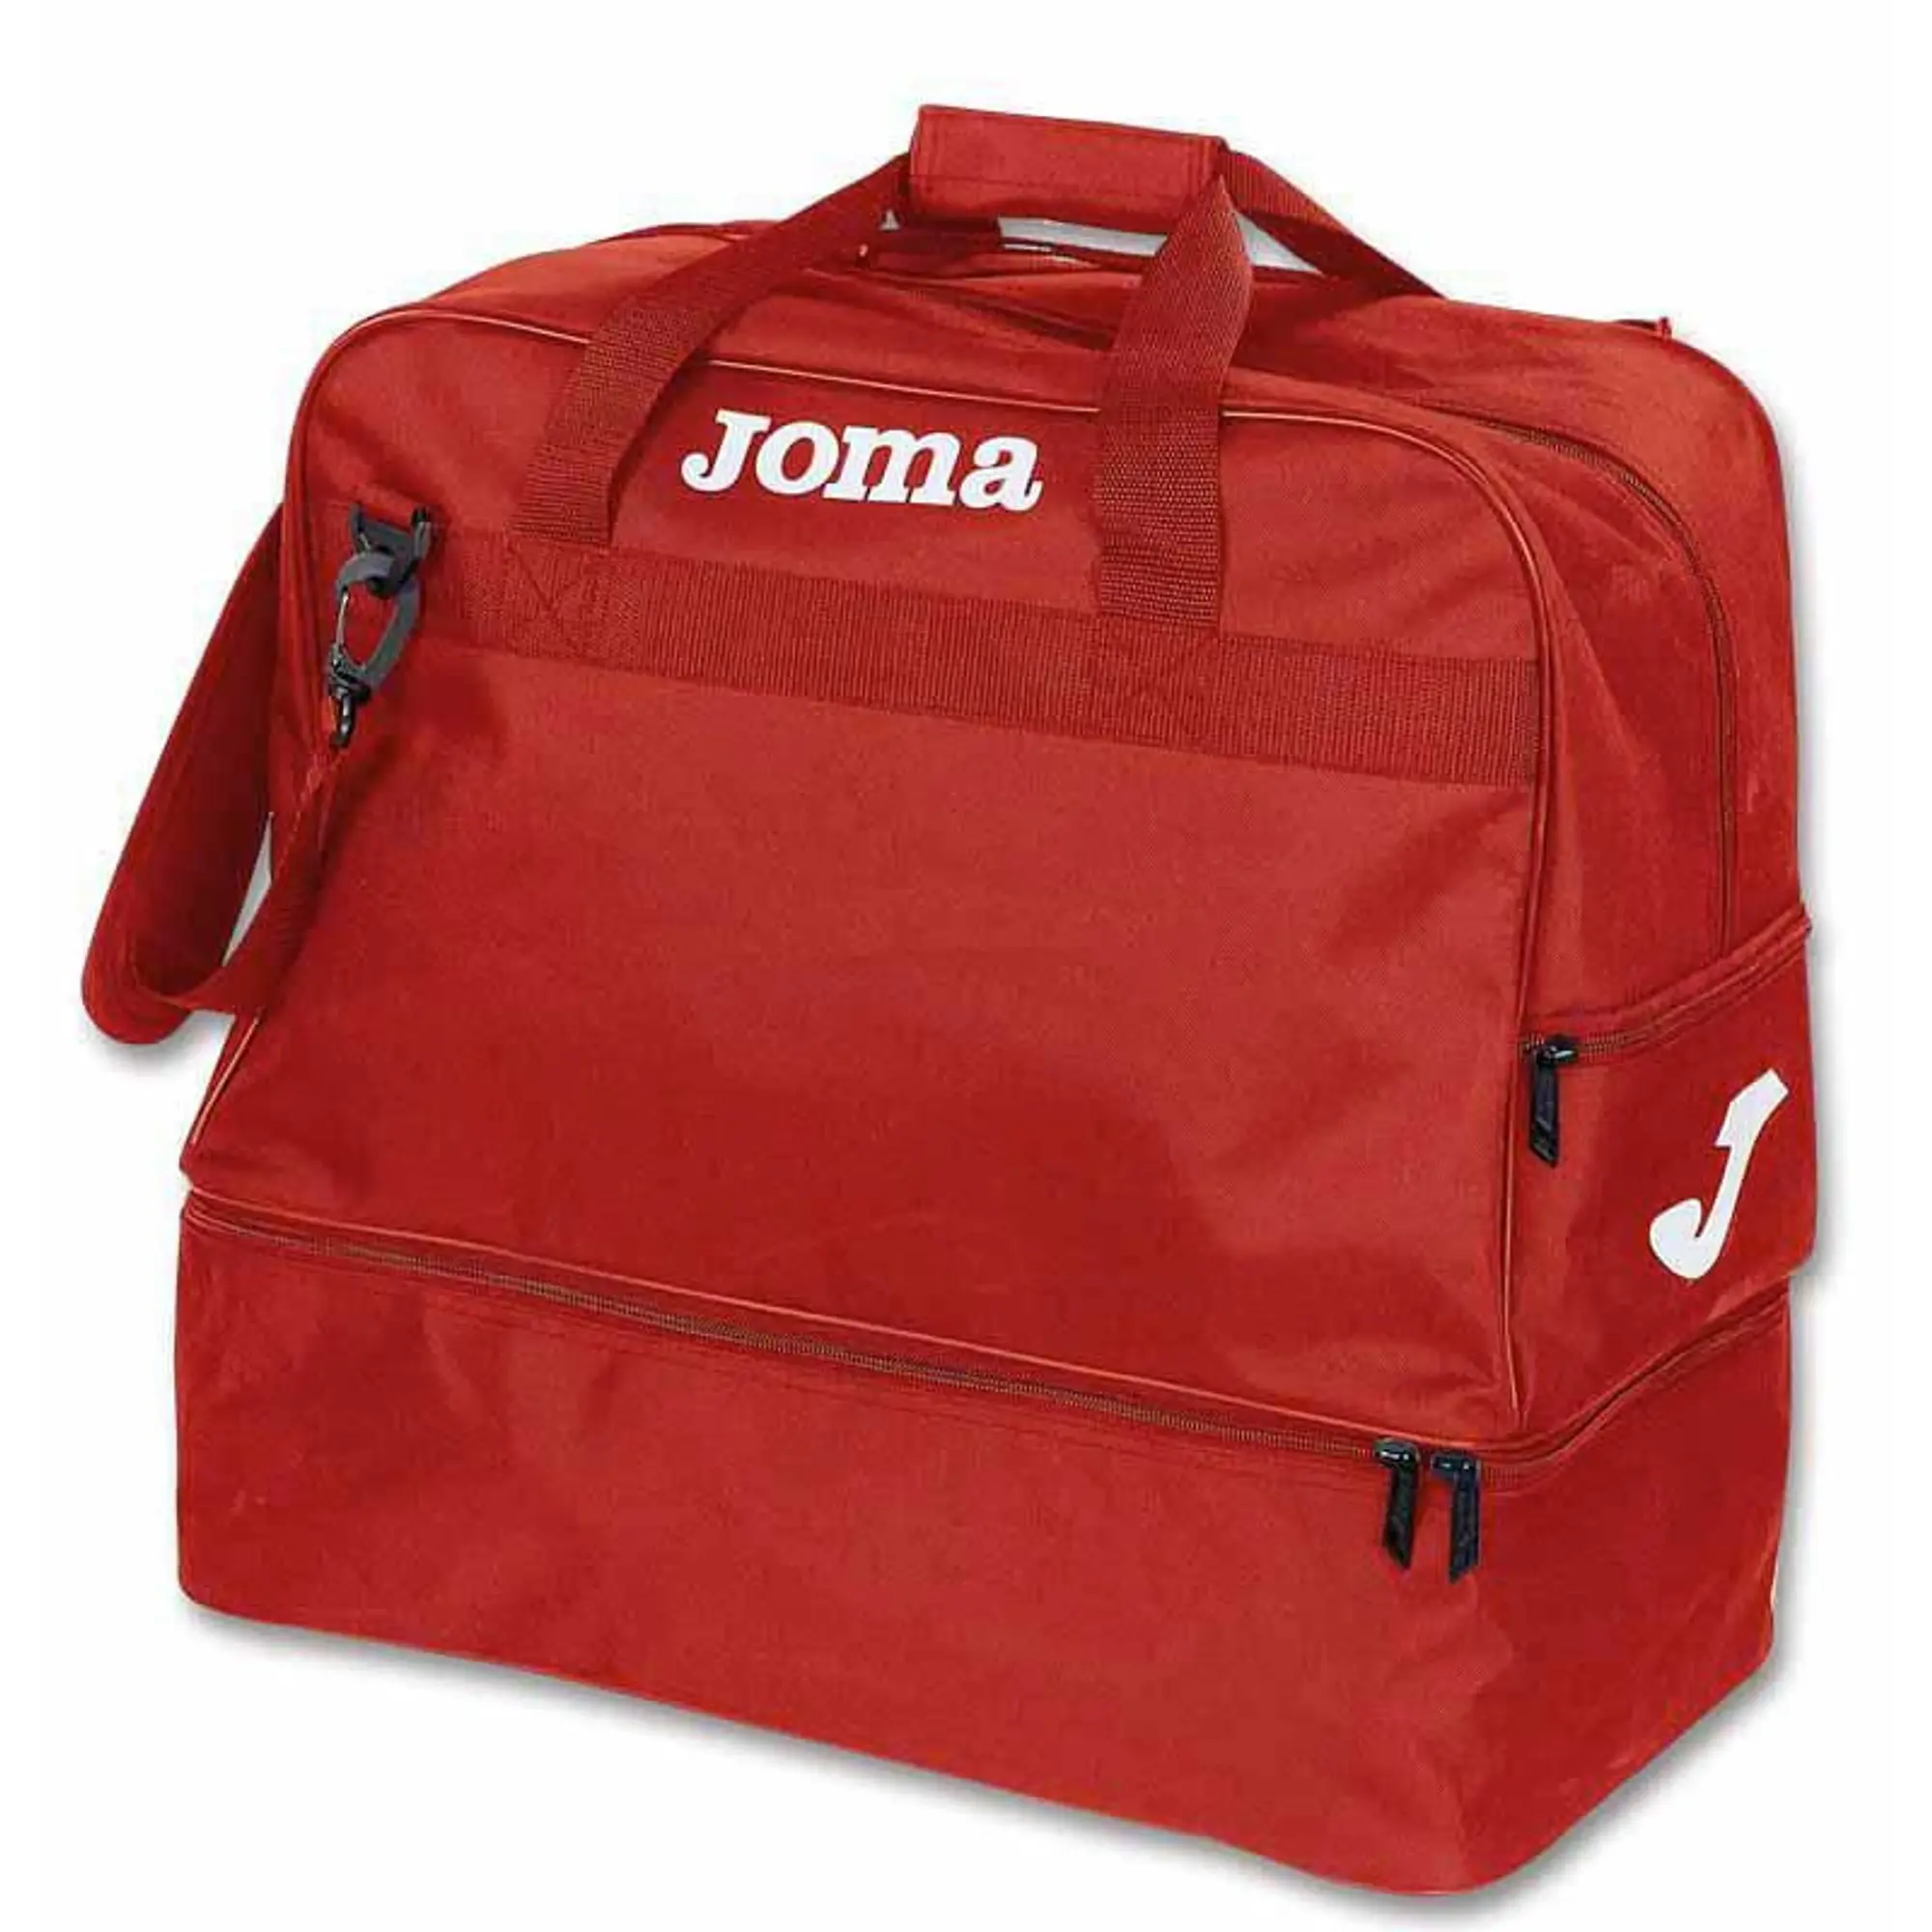 Joma Training Iii L Bag  - Red